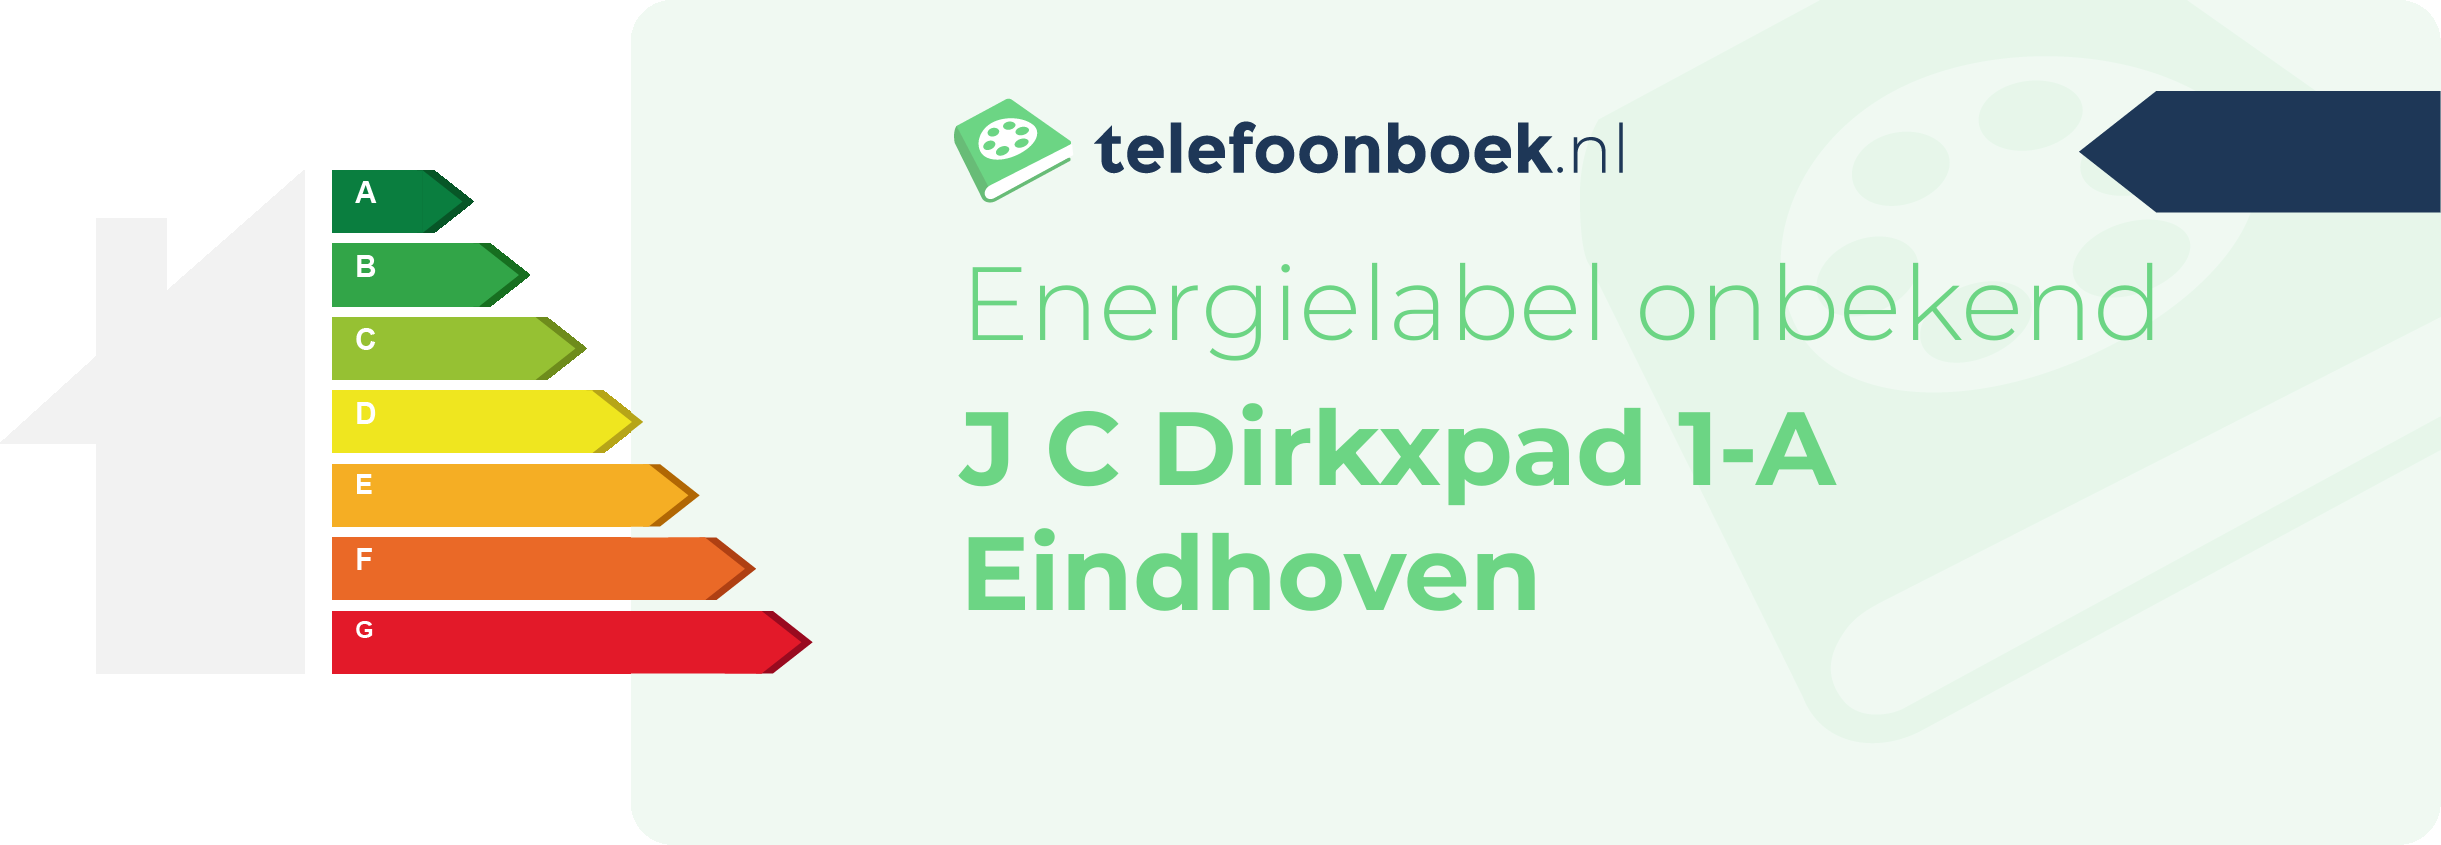 Energielabel J C Dirkxpad 1-A Eindhoven